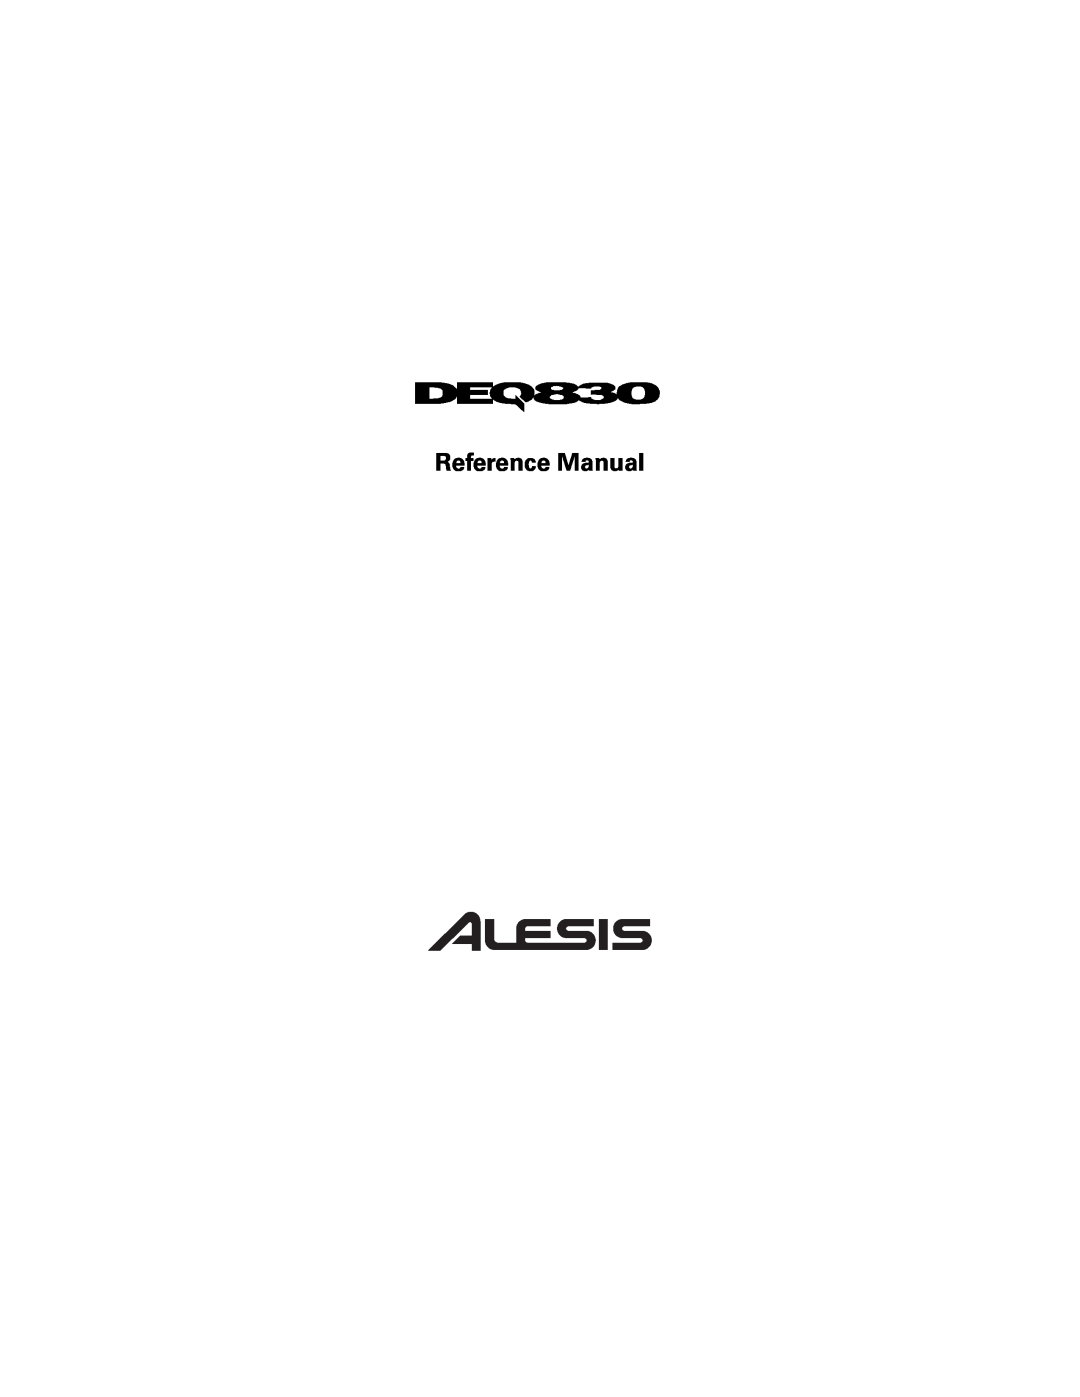 Alesis DEQ830 manual Reference Manual 